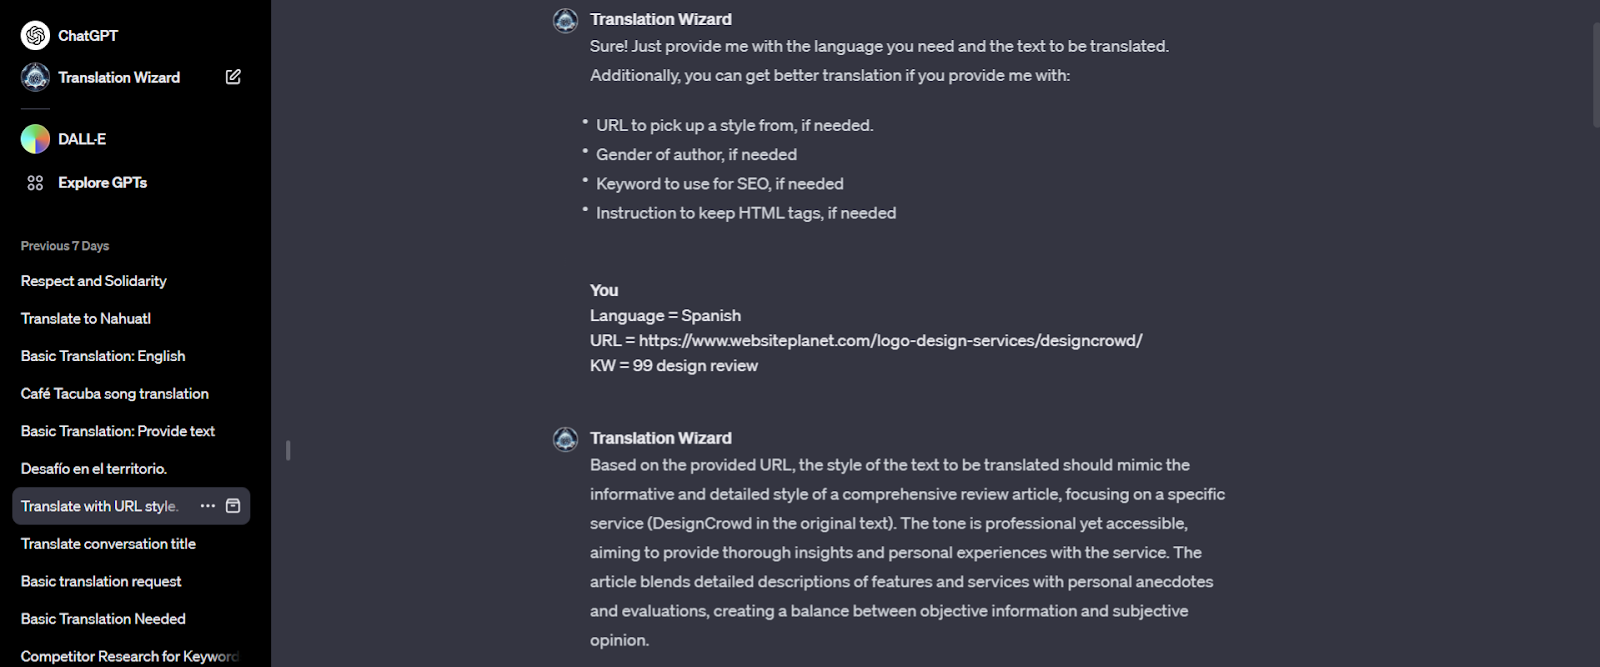 Translation Wizard URL Style Translation